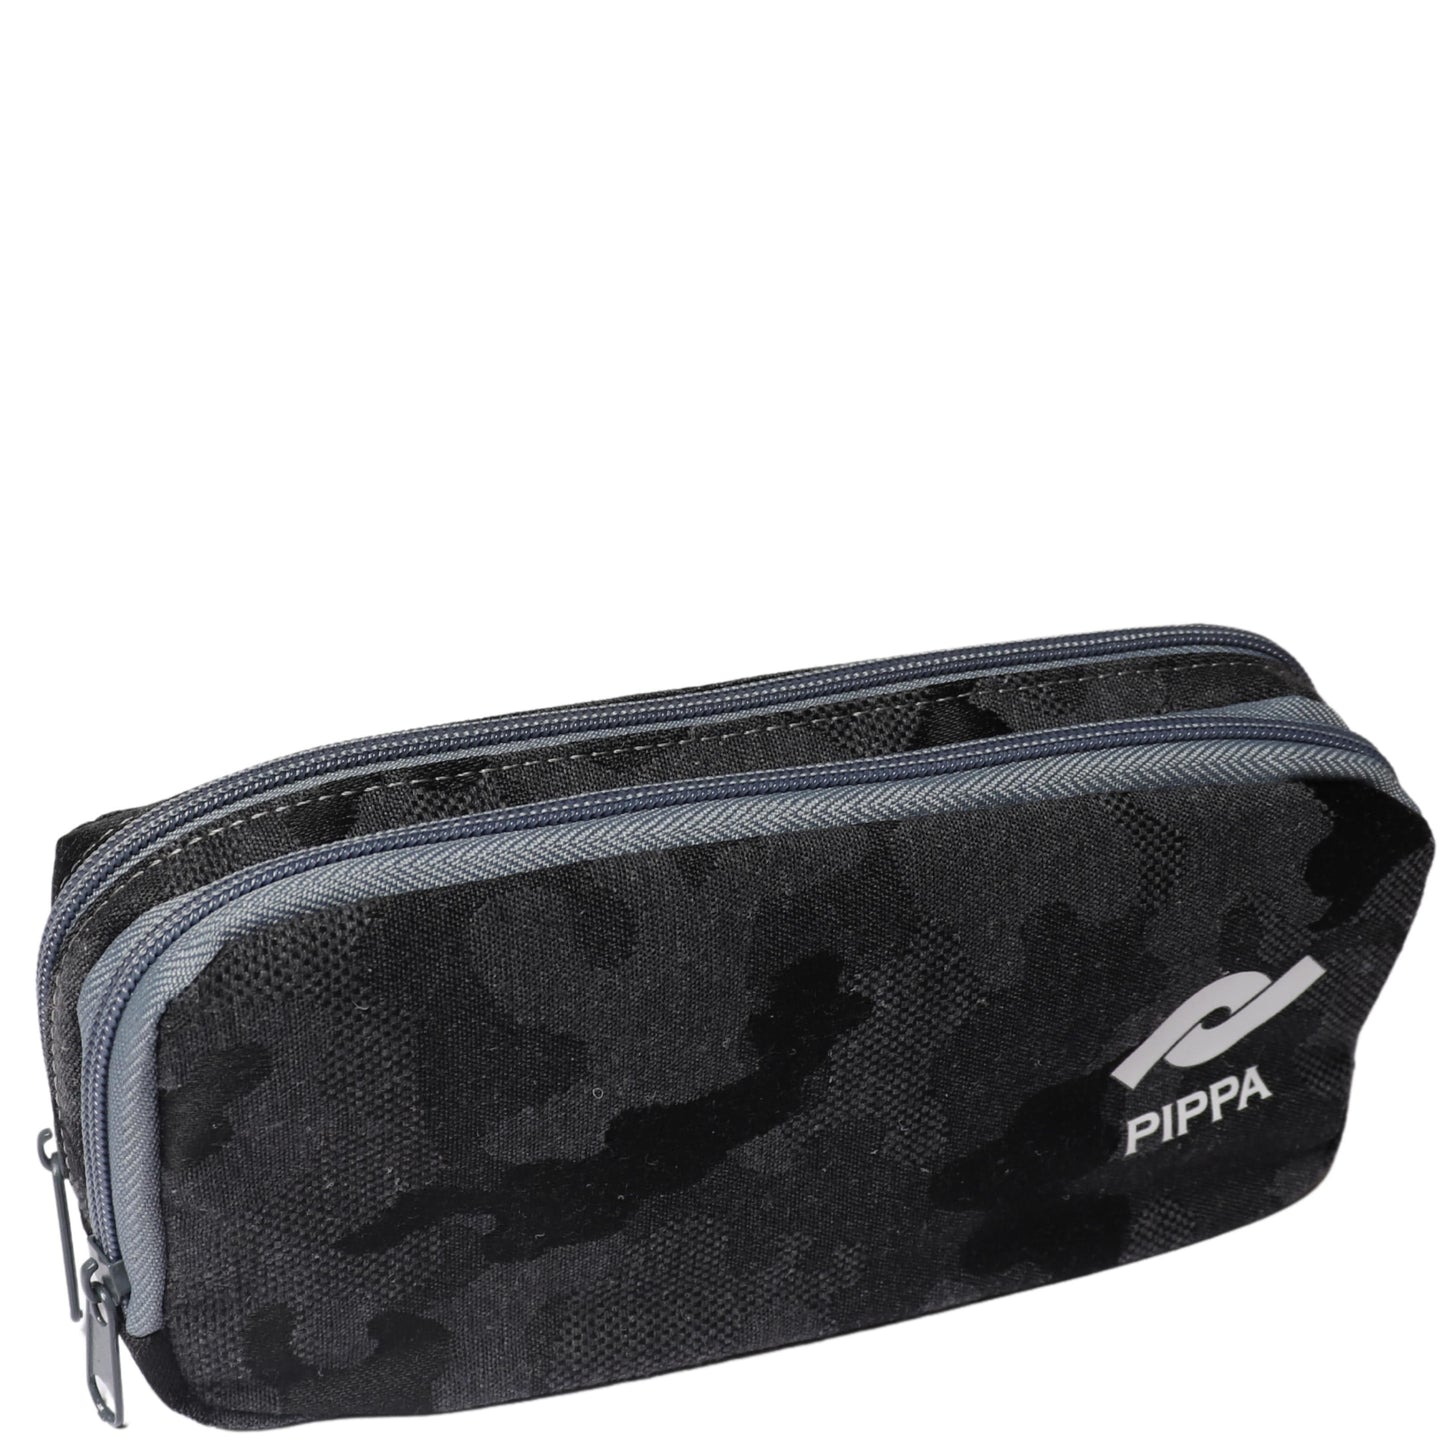 PIPPA School Bags & Supplies Grey PIPPA - Pencil Case 2 Zippers